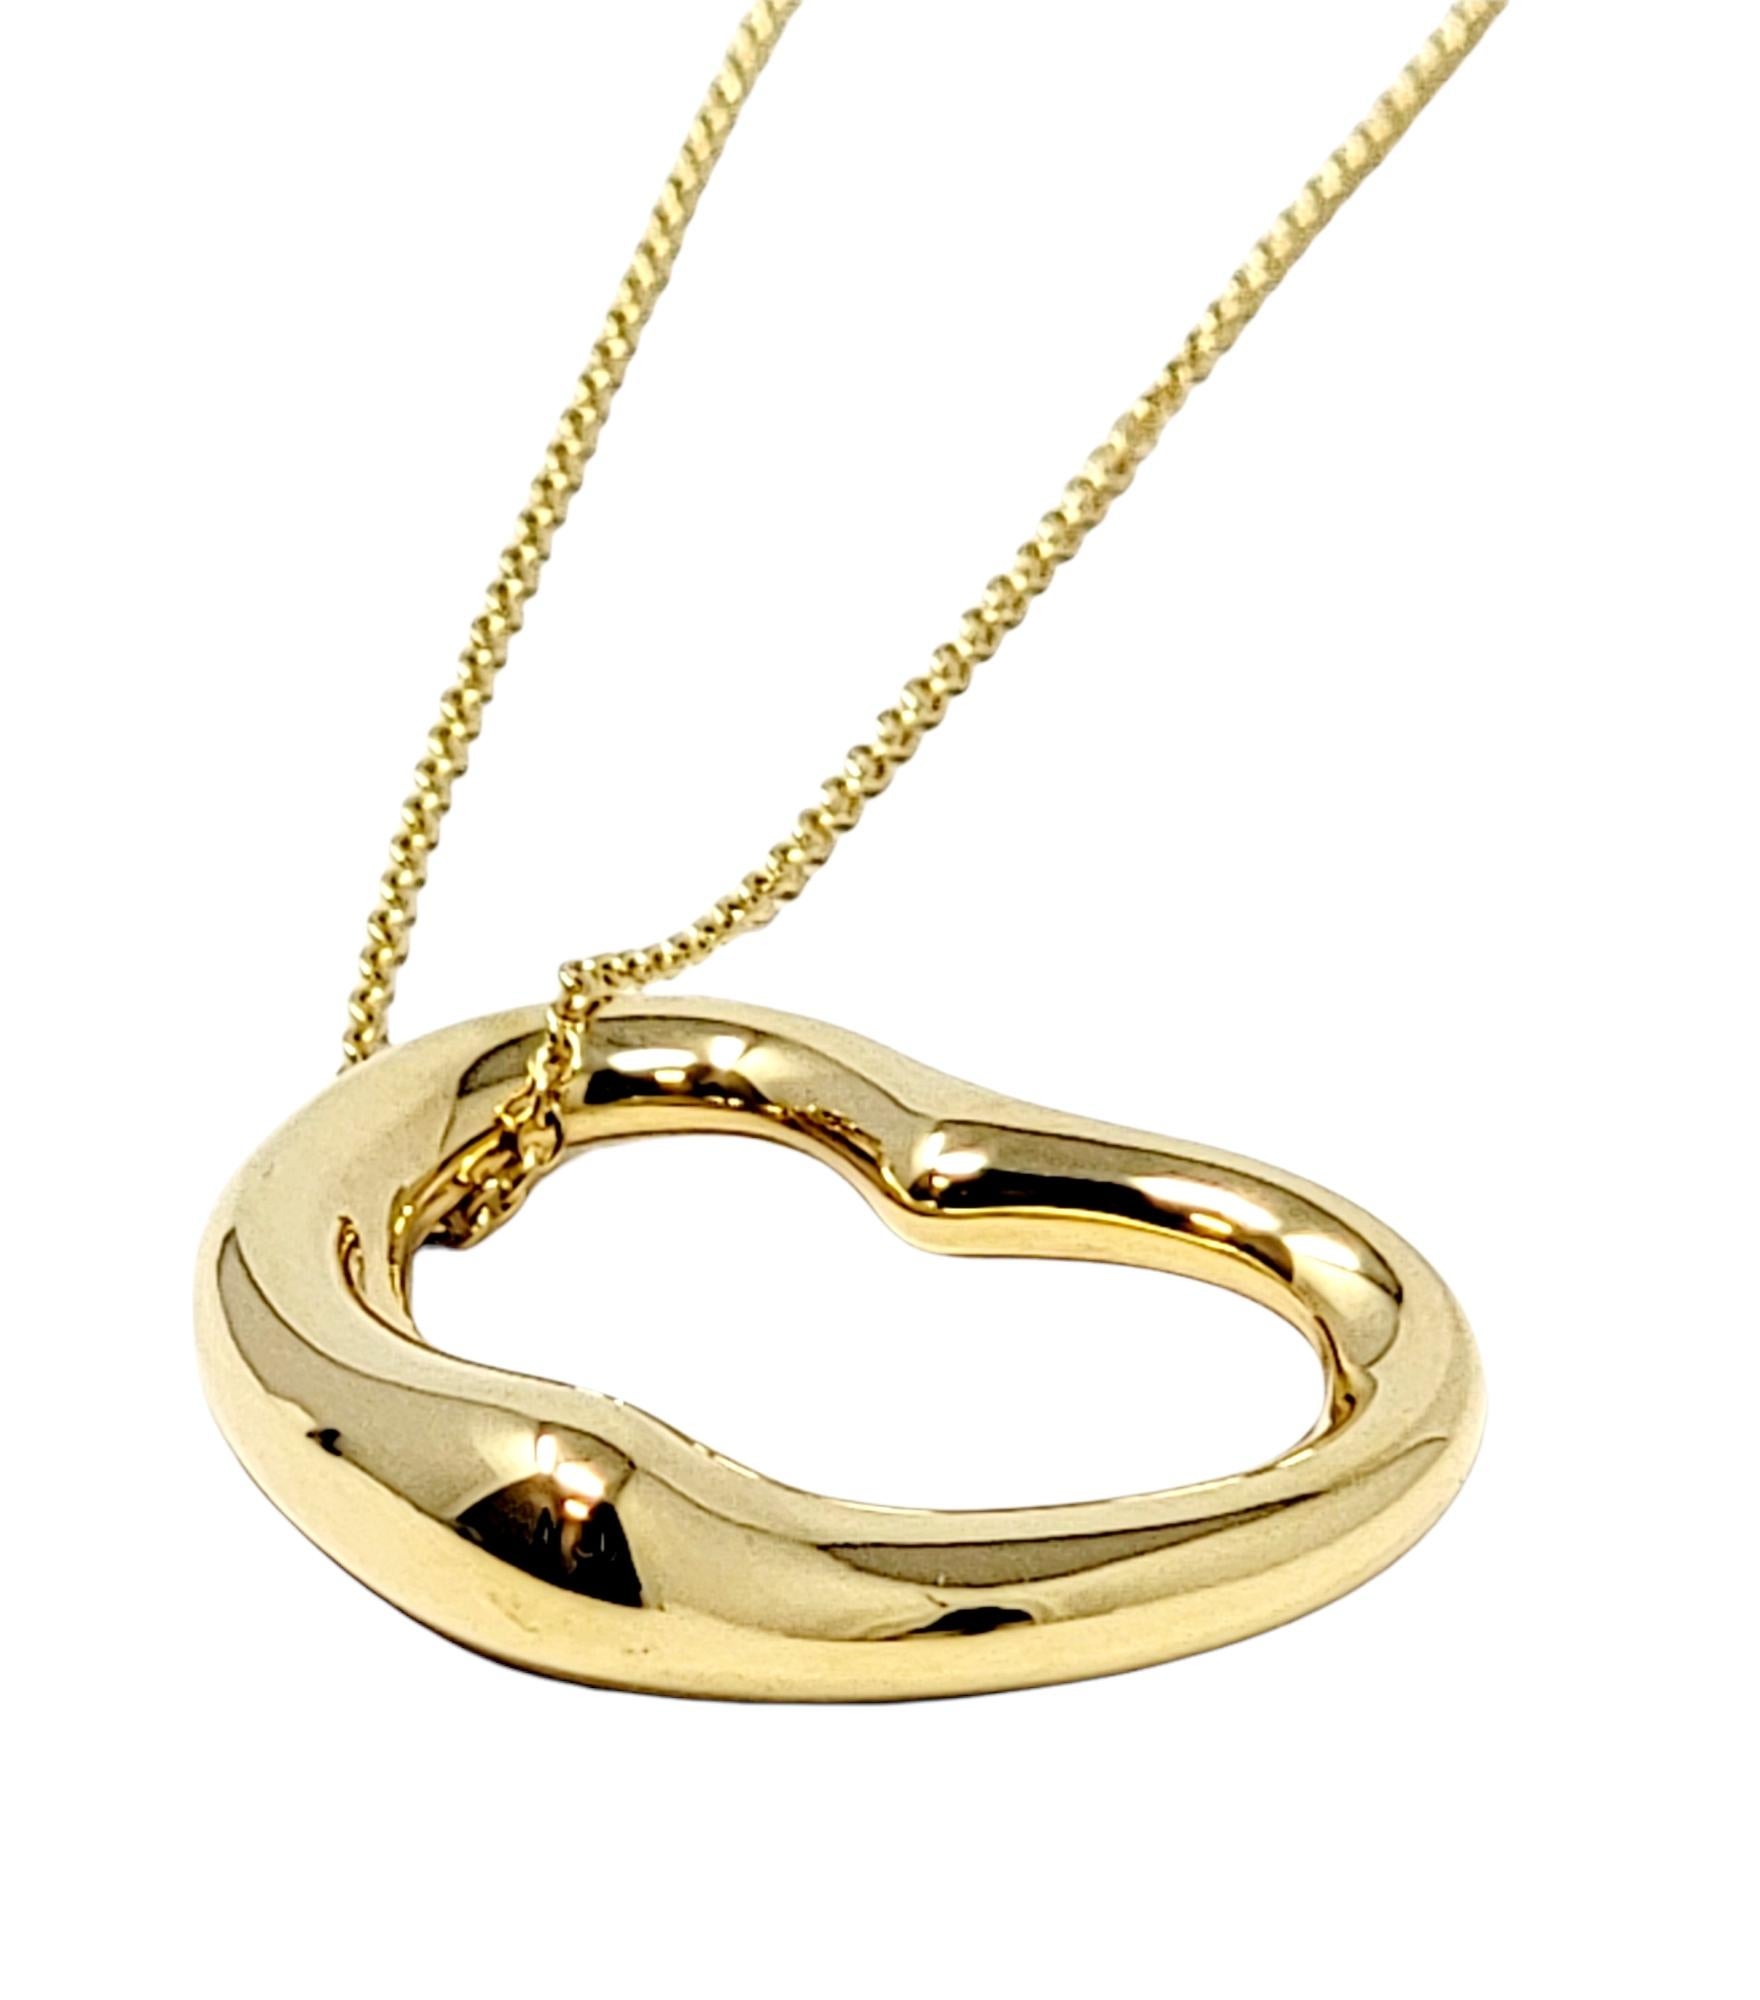 Elsa Peretti for Tiffany & Co. 18 Karat Yellow Gold Open Heart Pendant Necklace 1